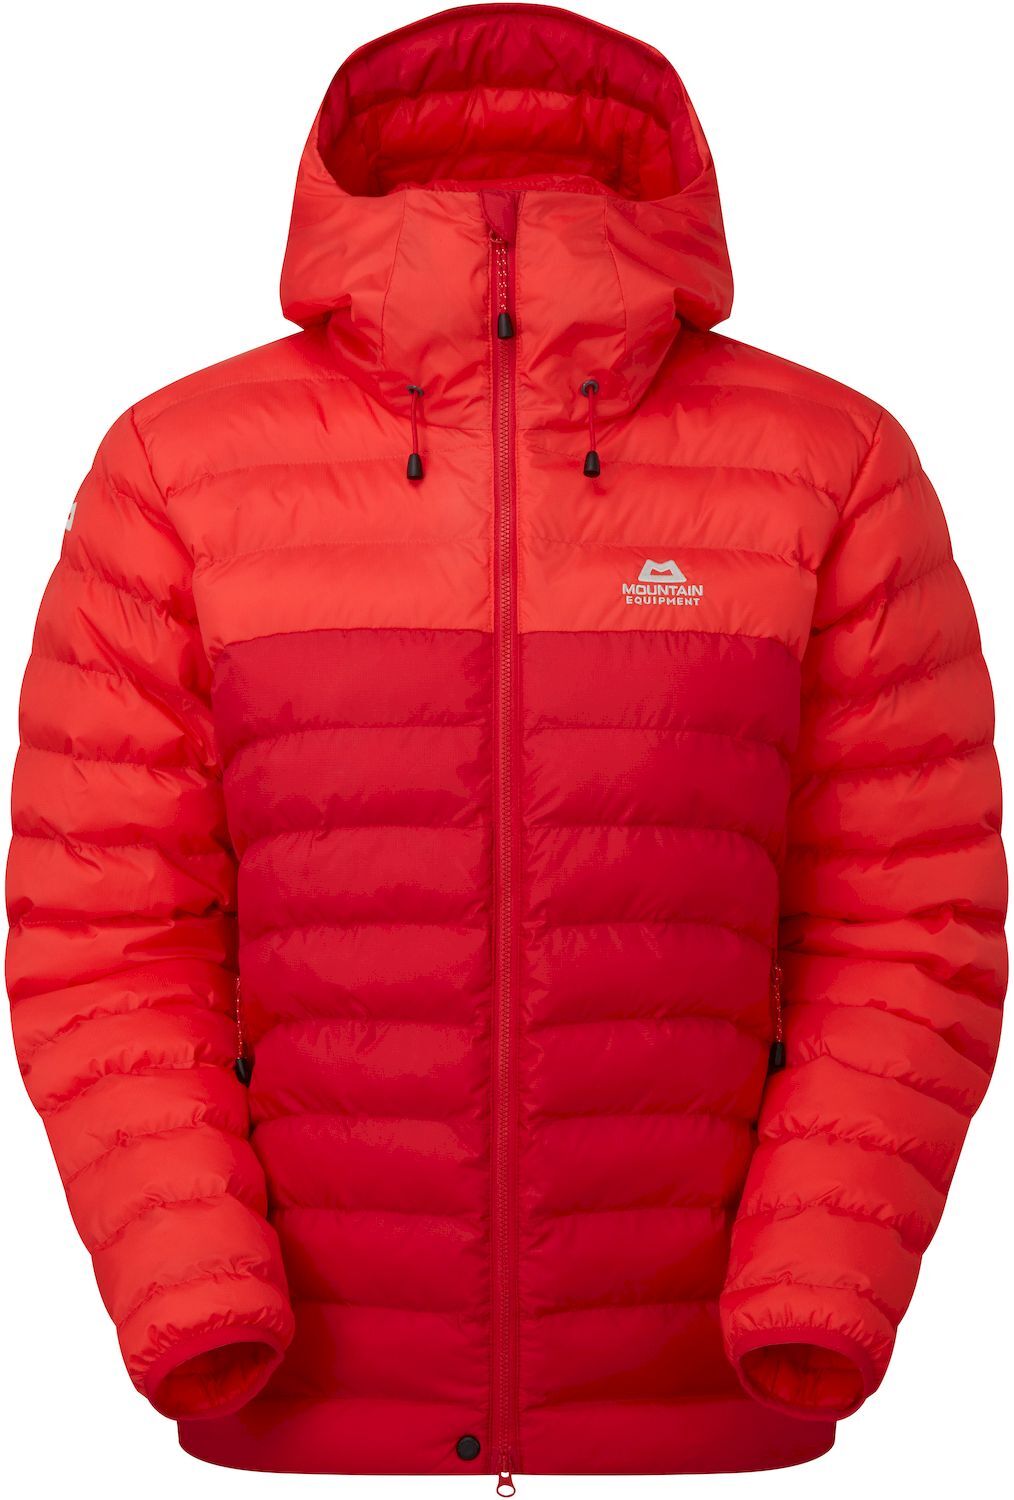 Mountain Equipment Superflux Women's Jacket - Synthetic jacket - Women's